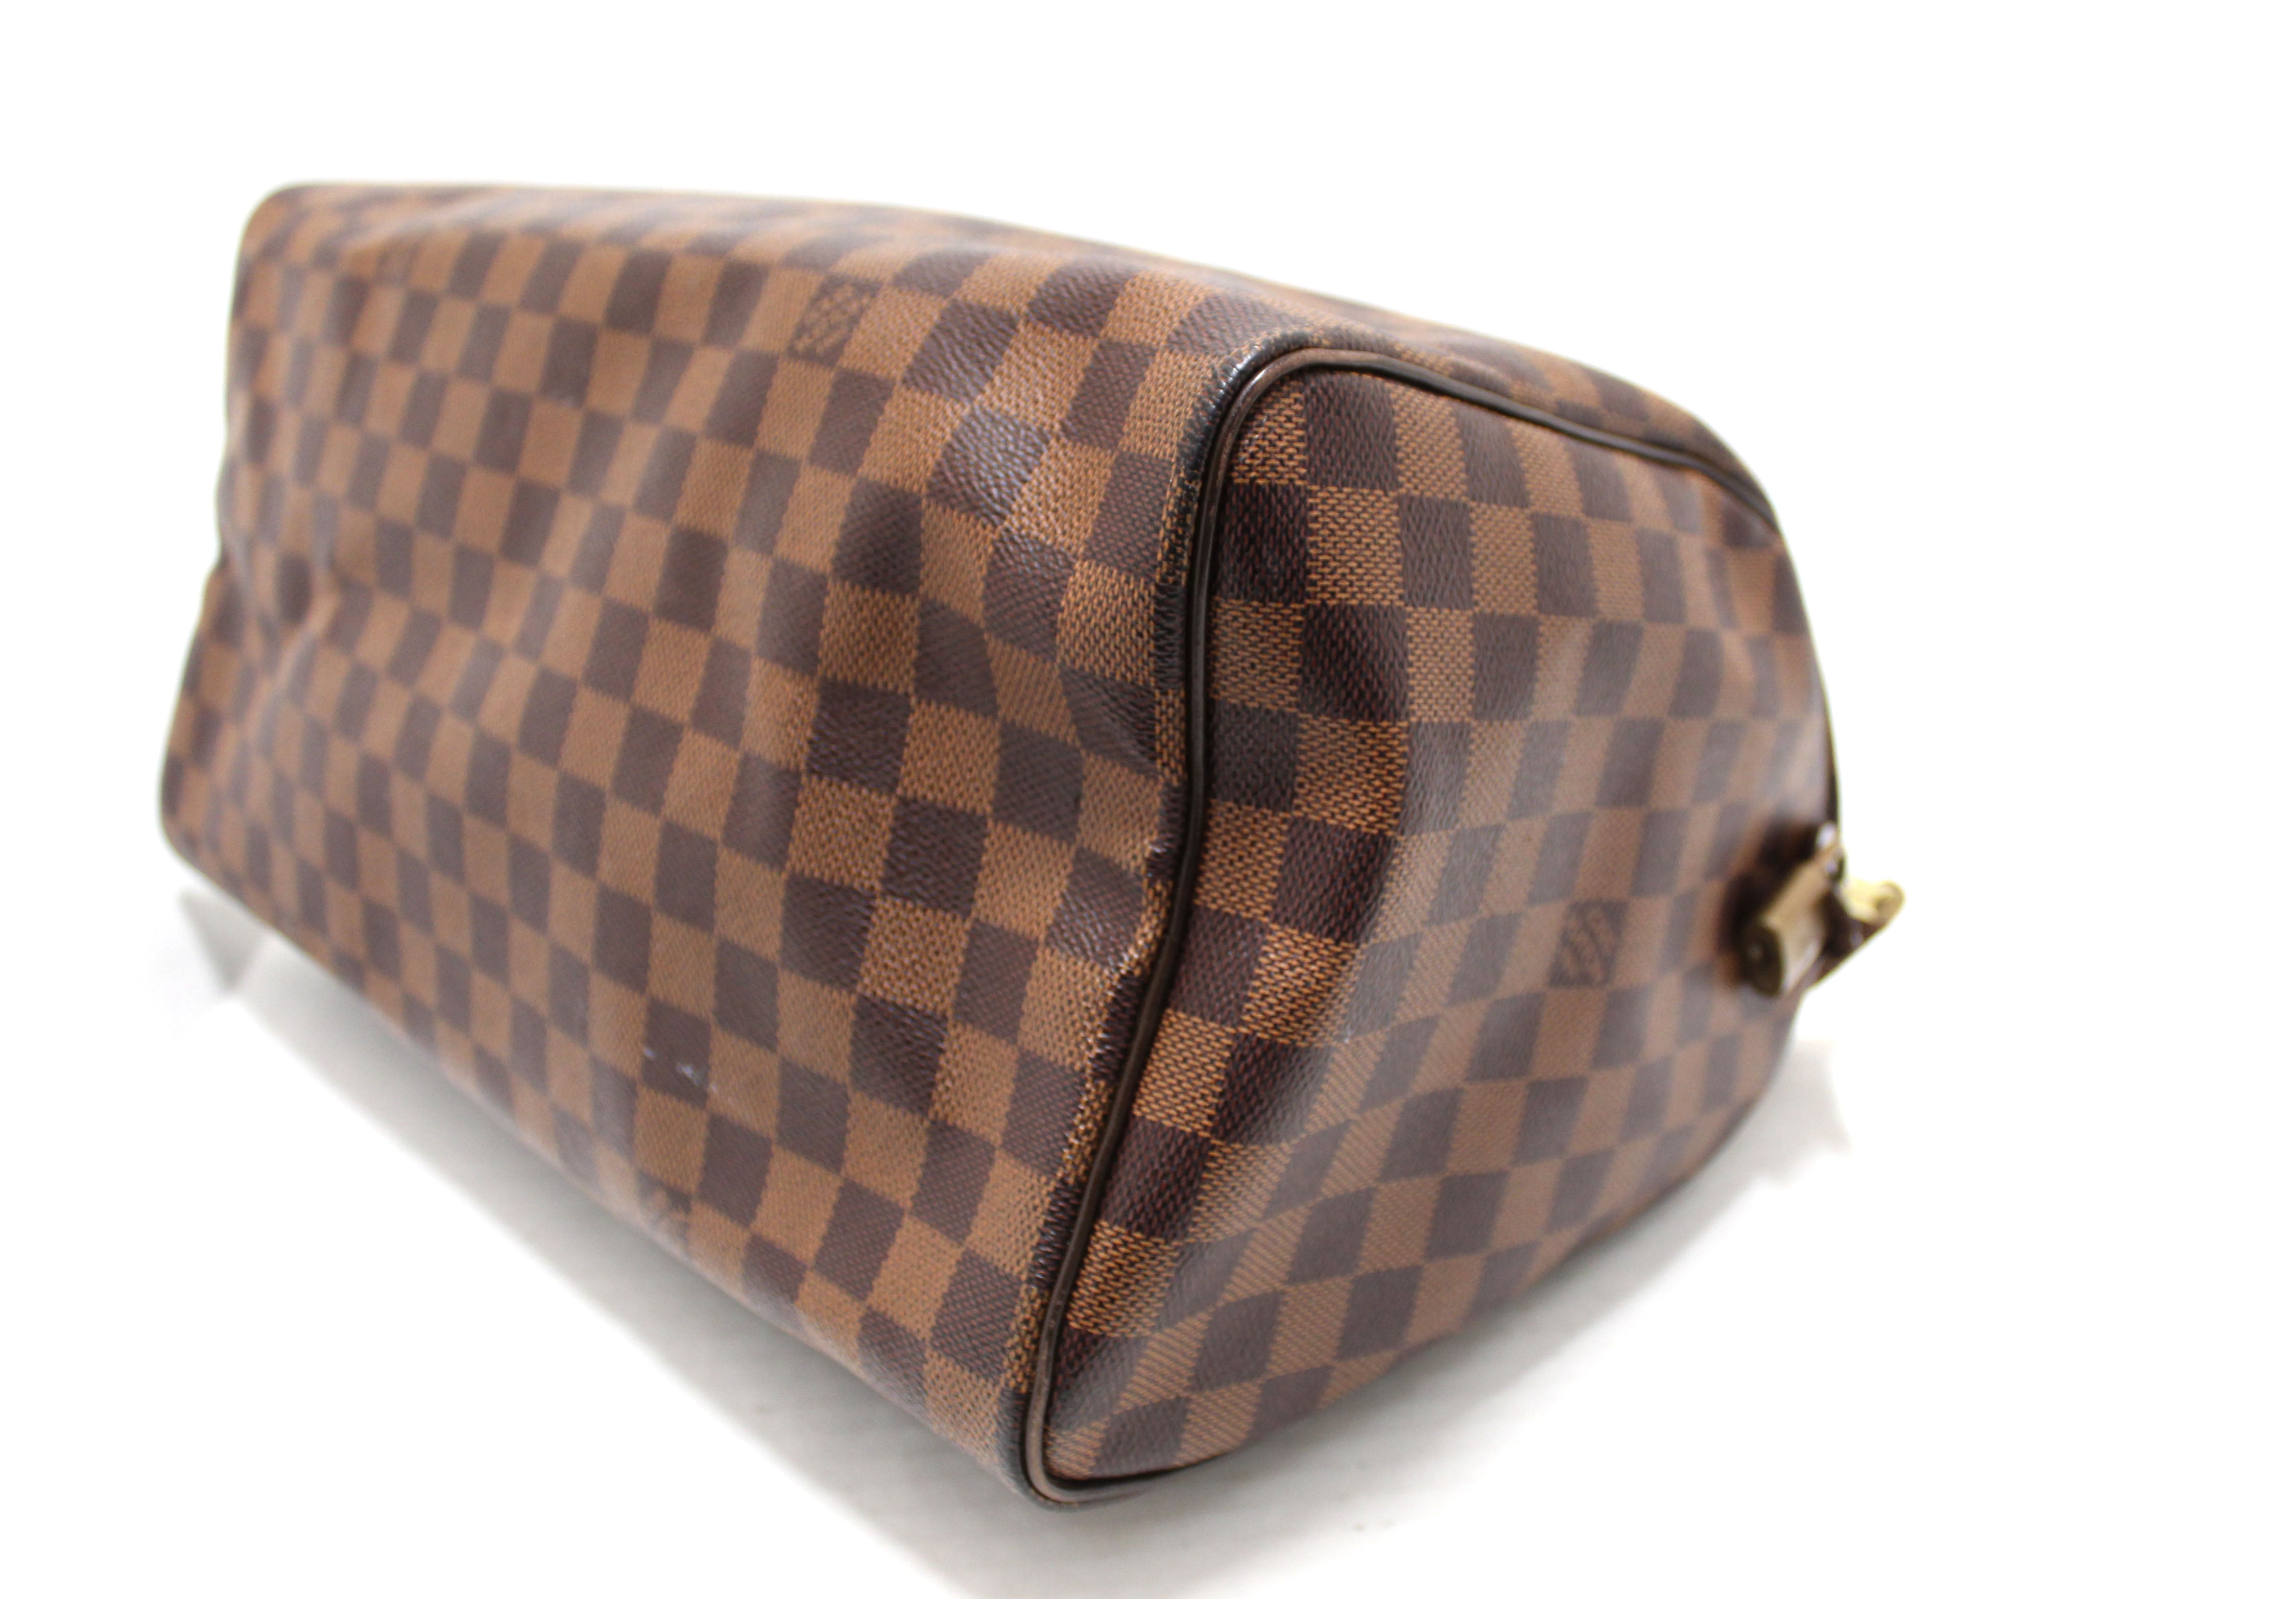 Louis Vuitton, Bags, Authentic Louis Vuitton Damier Ebene Speedy 35